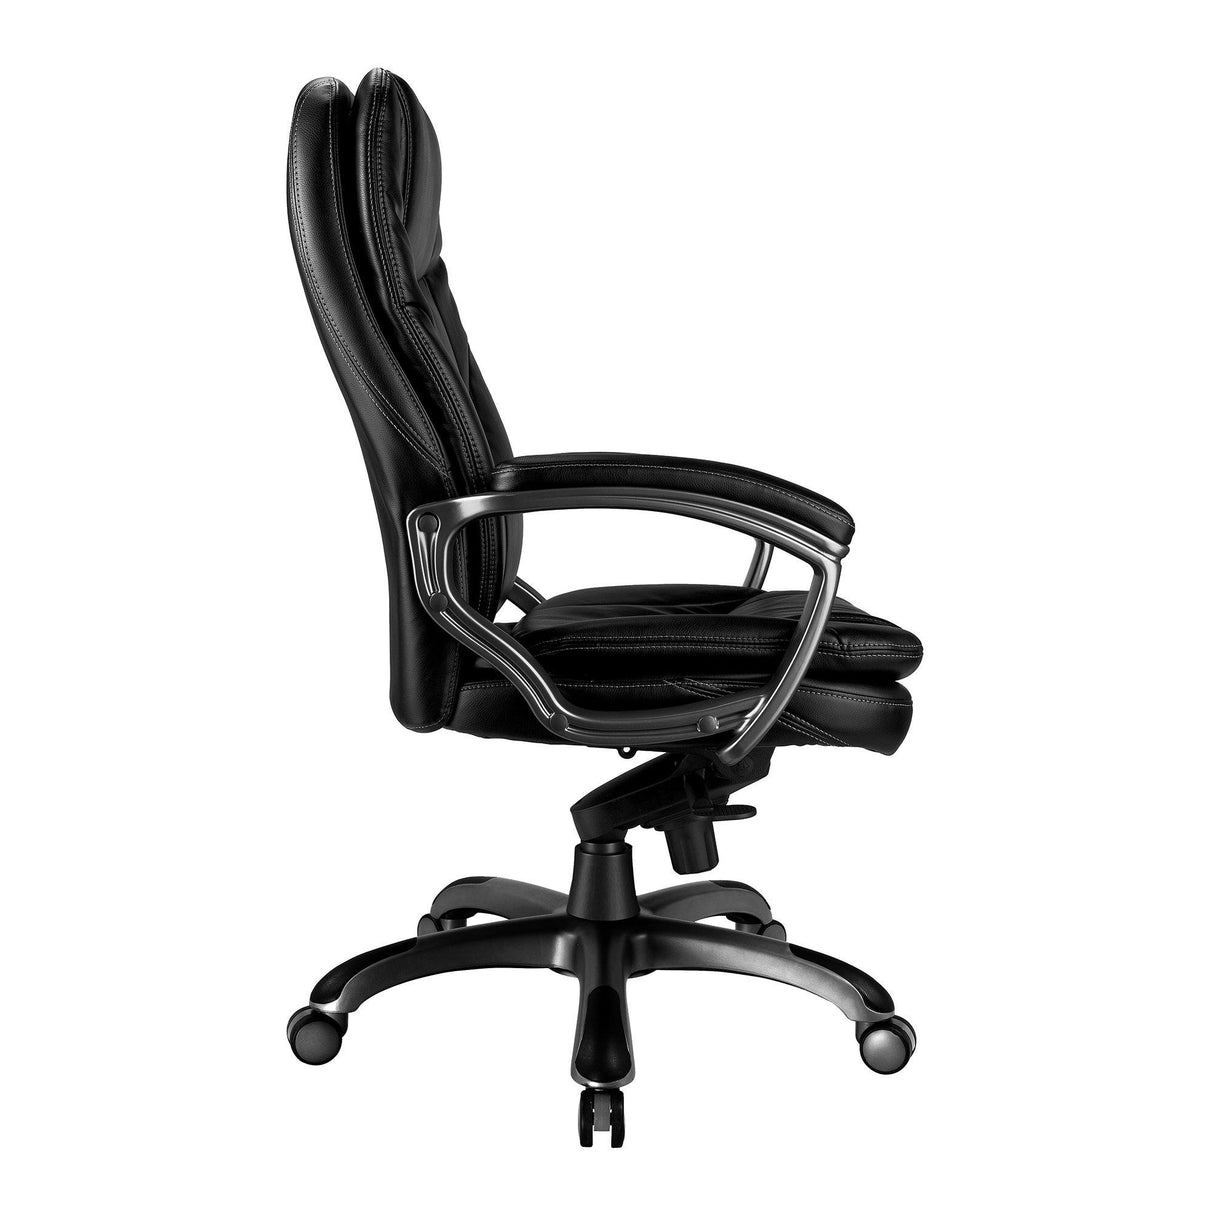 Nautilus Designs Kiev Luxurious High Back Leather Executive Chair - Black